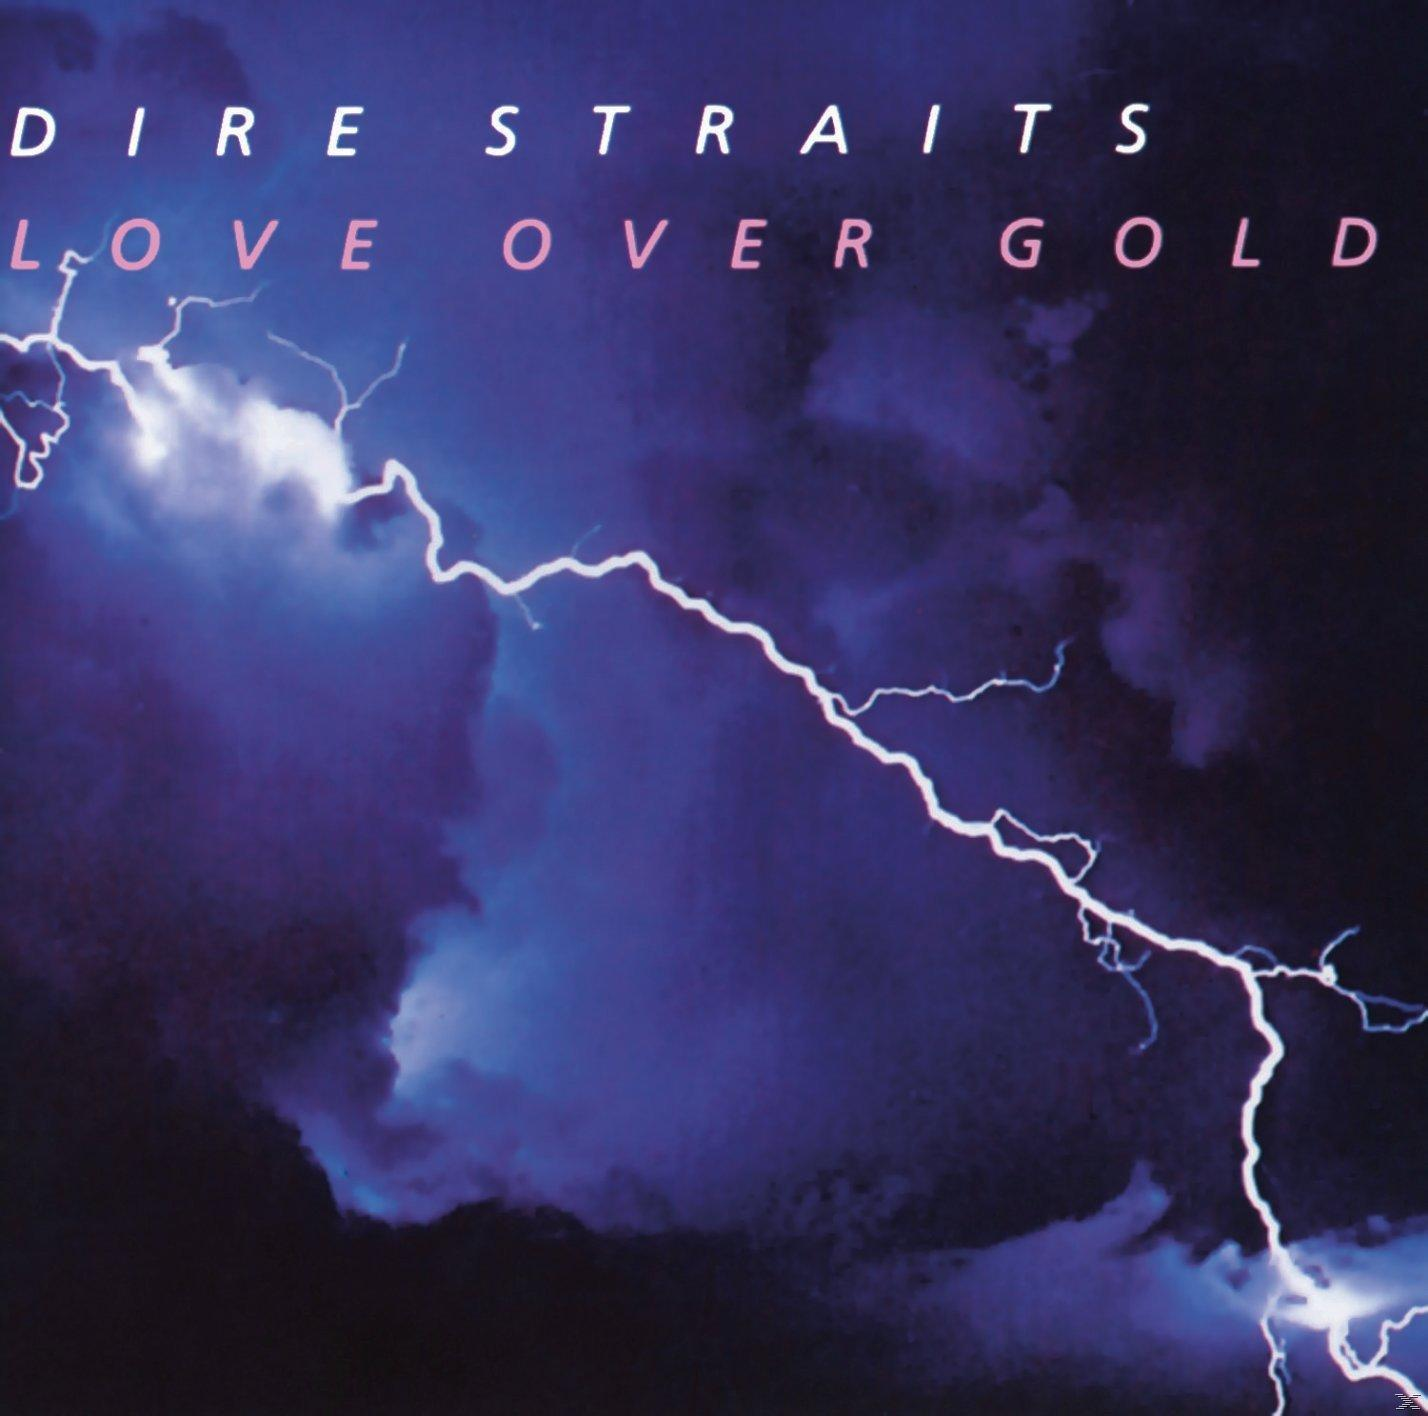 (Vinyl) Love Dire Straits Over Gold - - (Lp)